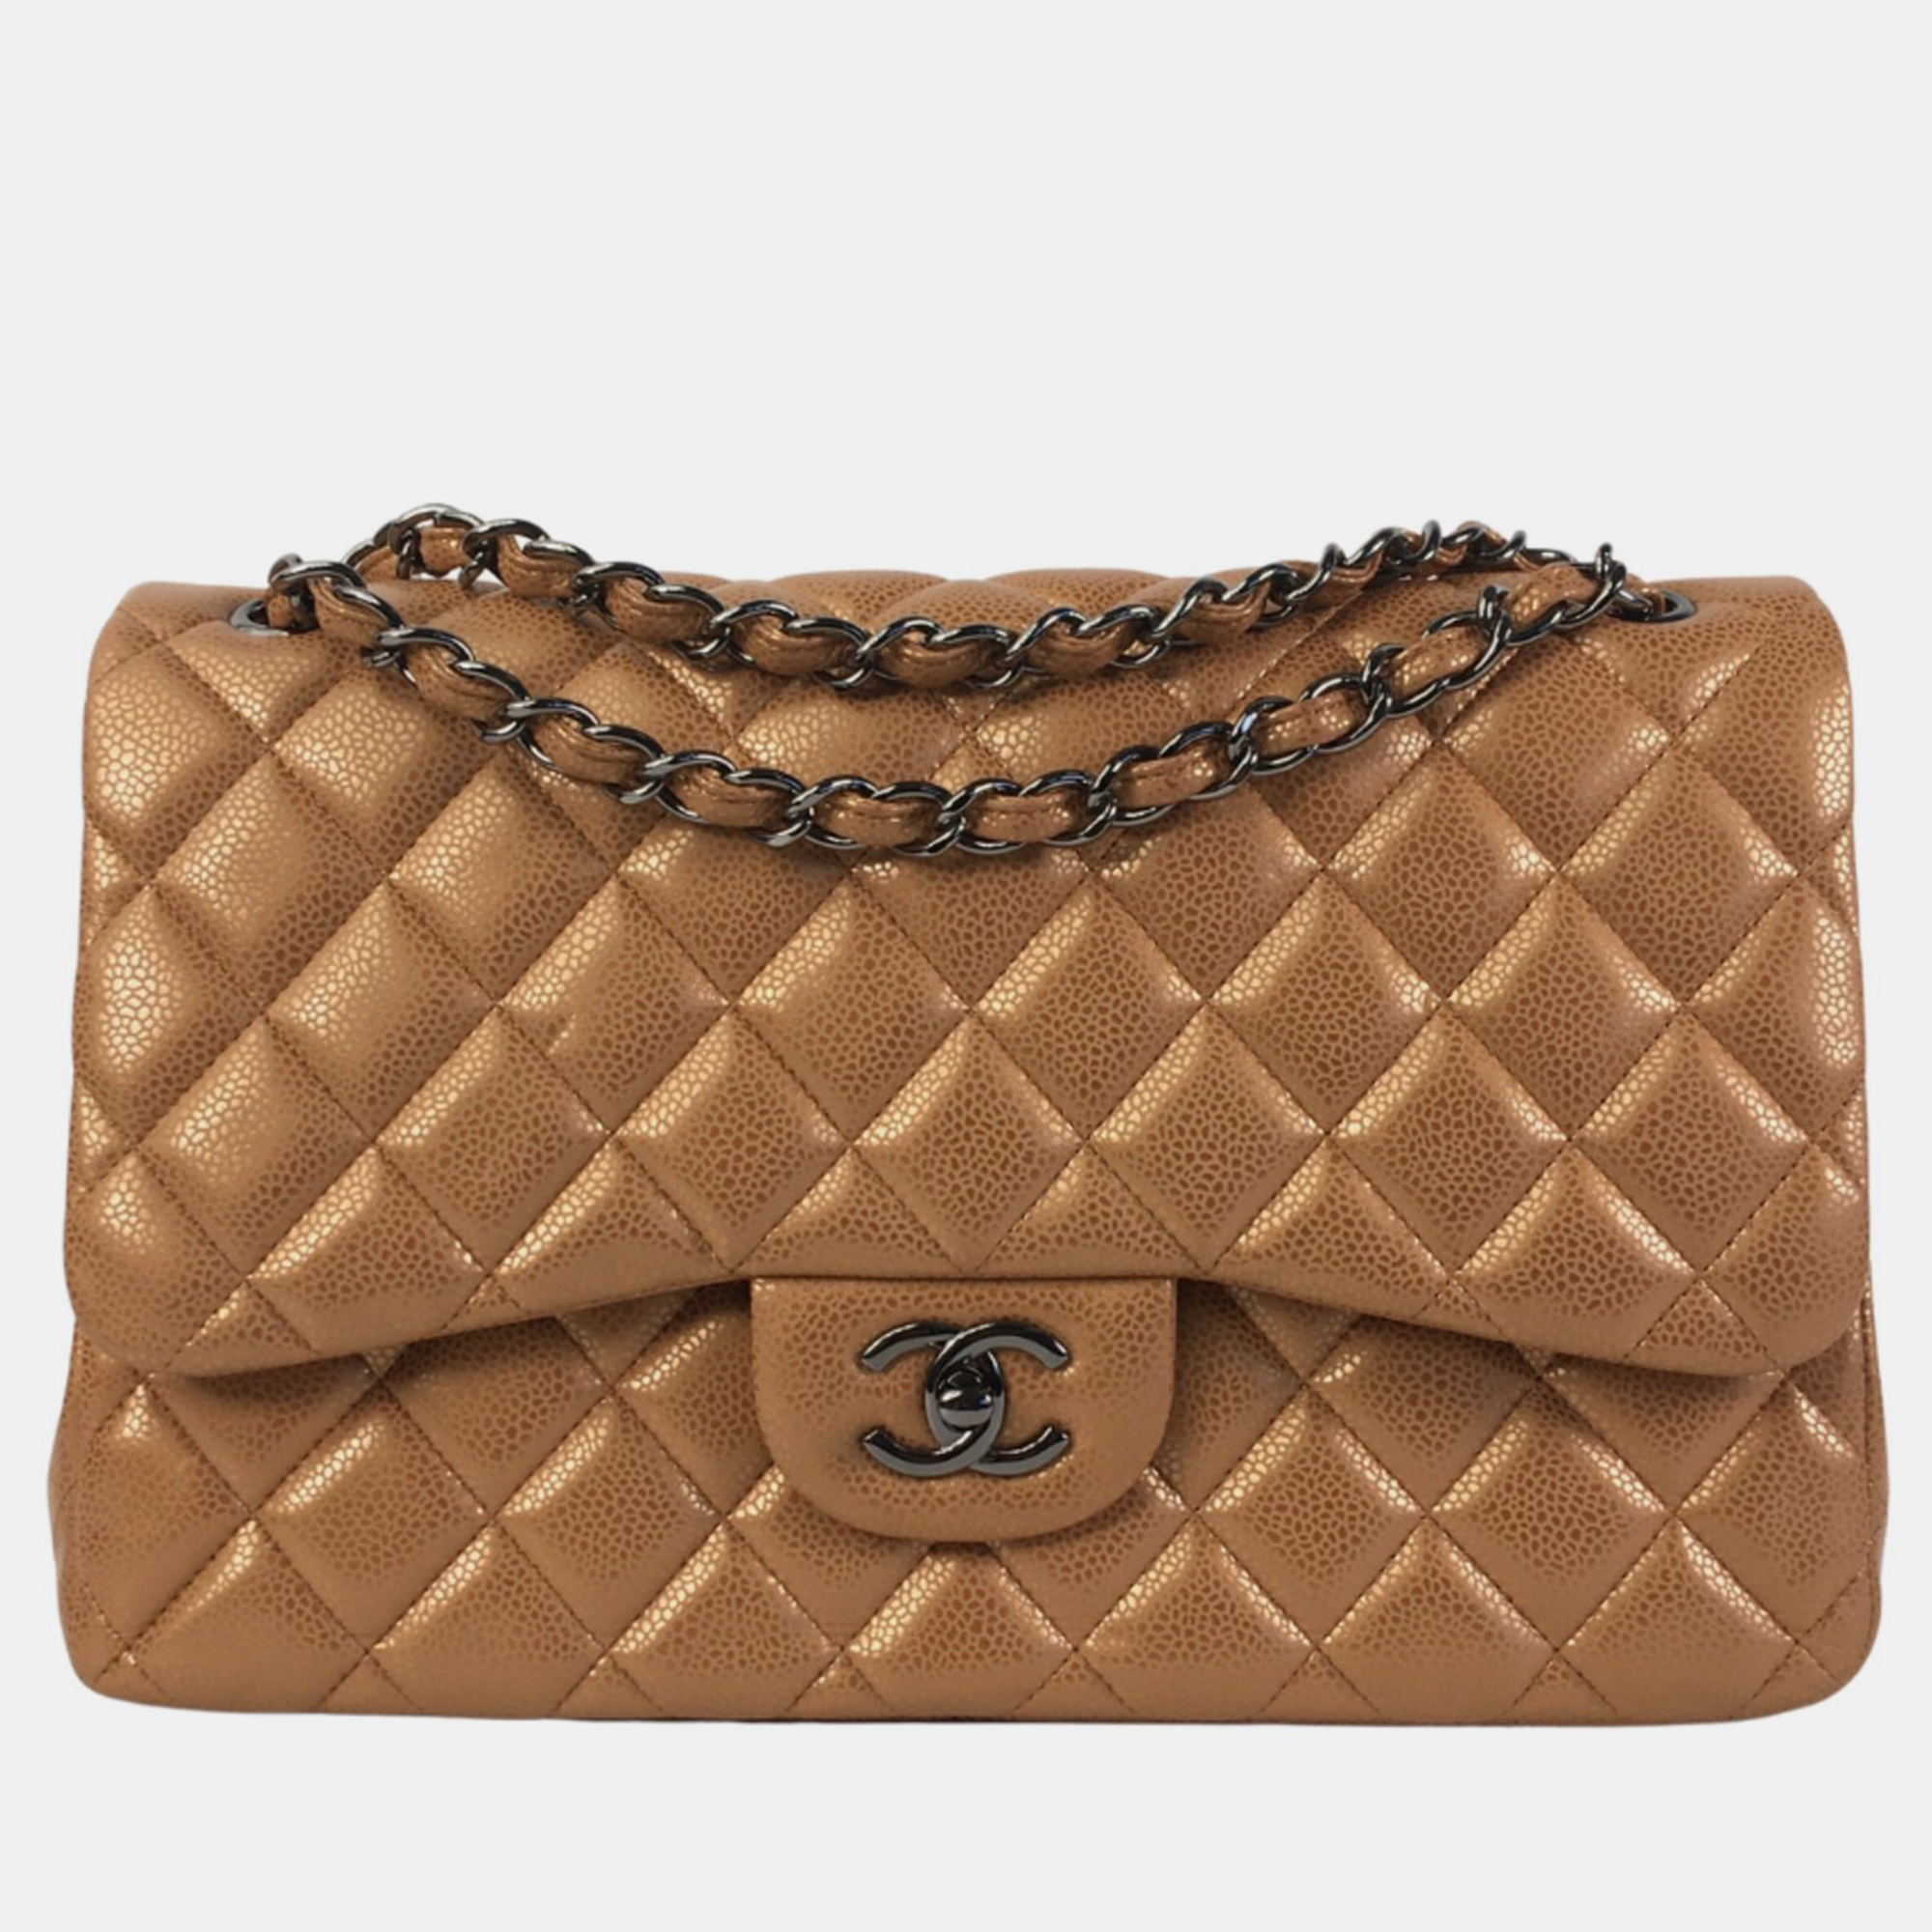 Chanel bronze leather jumbo classic double flap shoulder bag